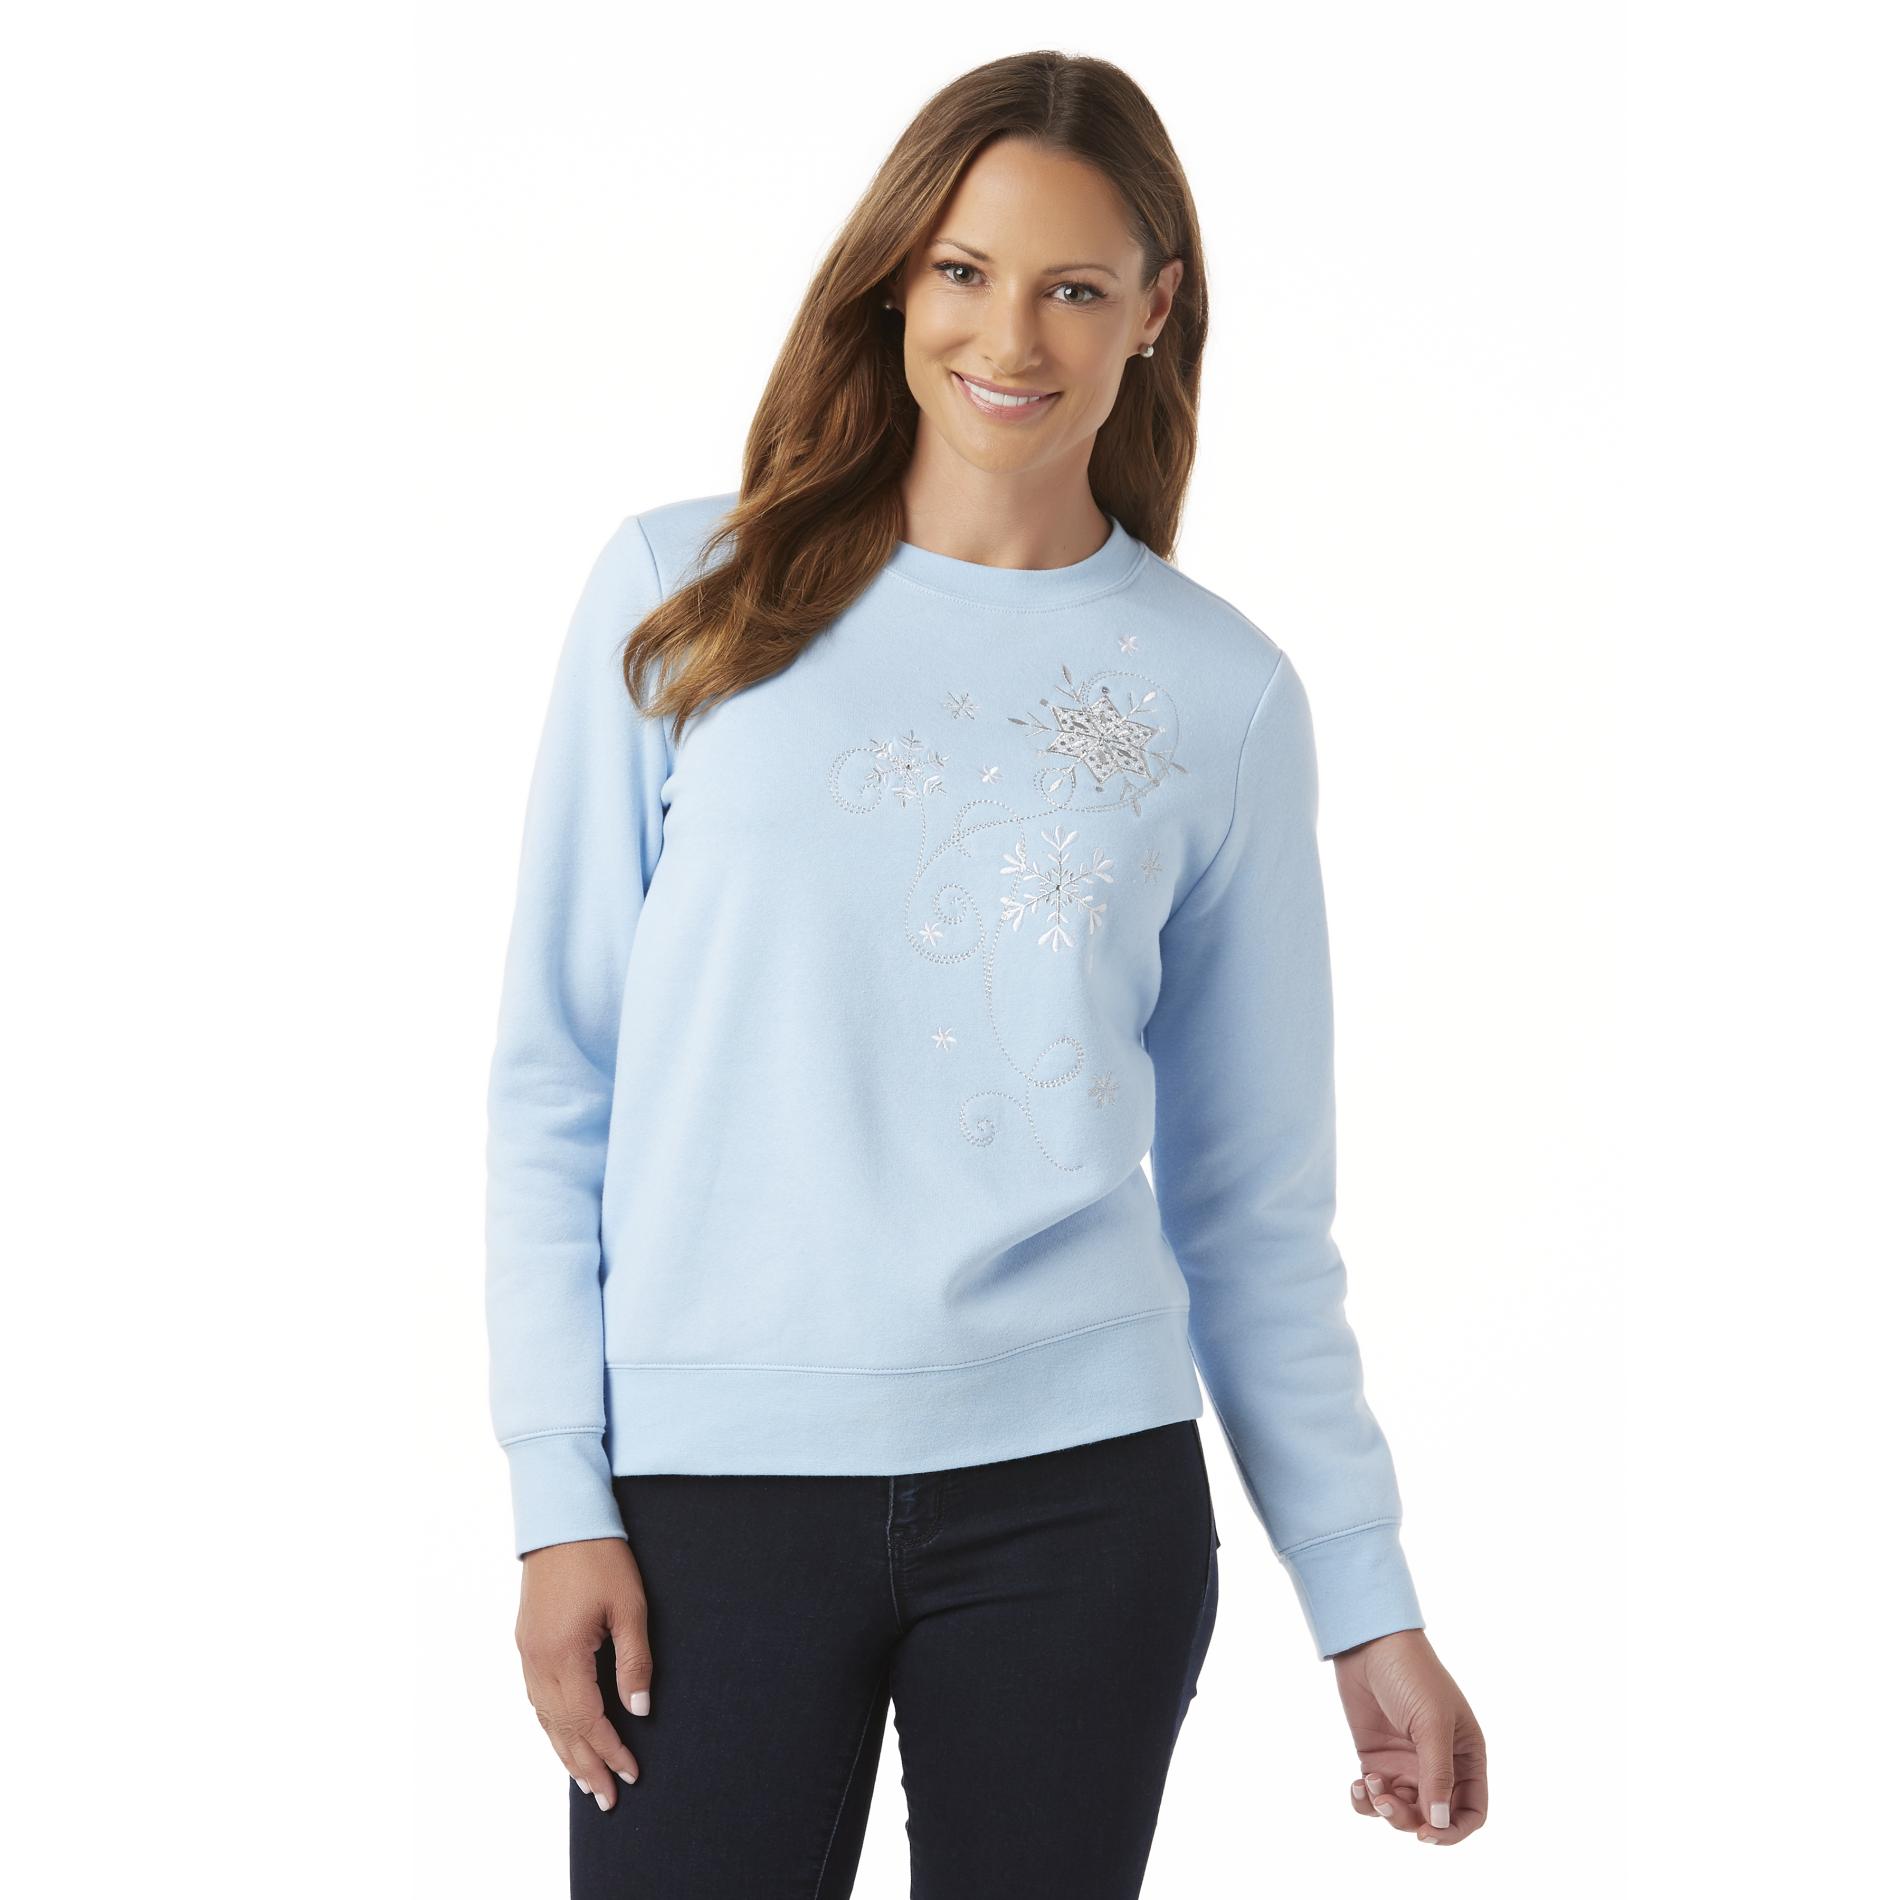 Holiday Editions Women's Embellished Christmas Sweatshirt - Snowflakes